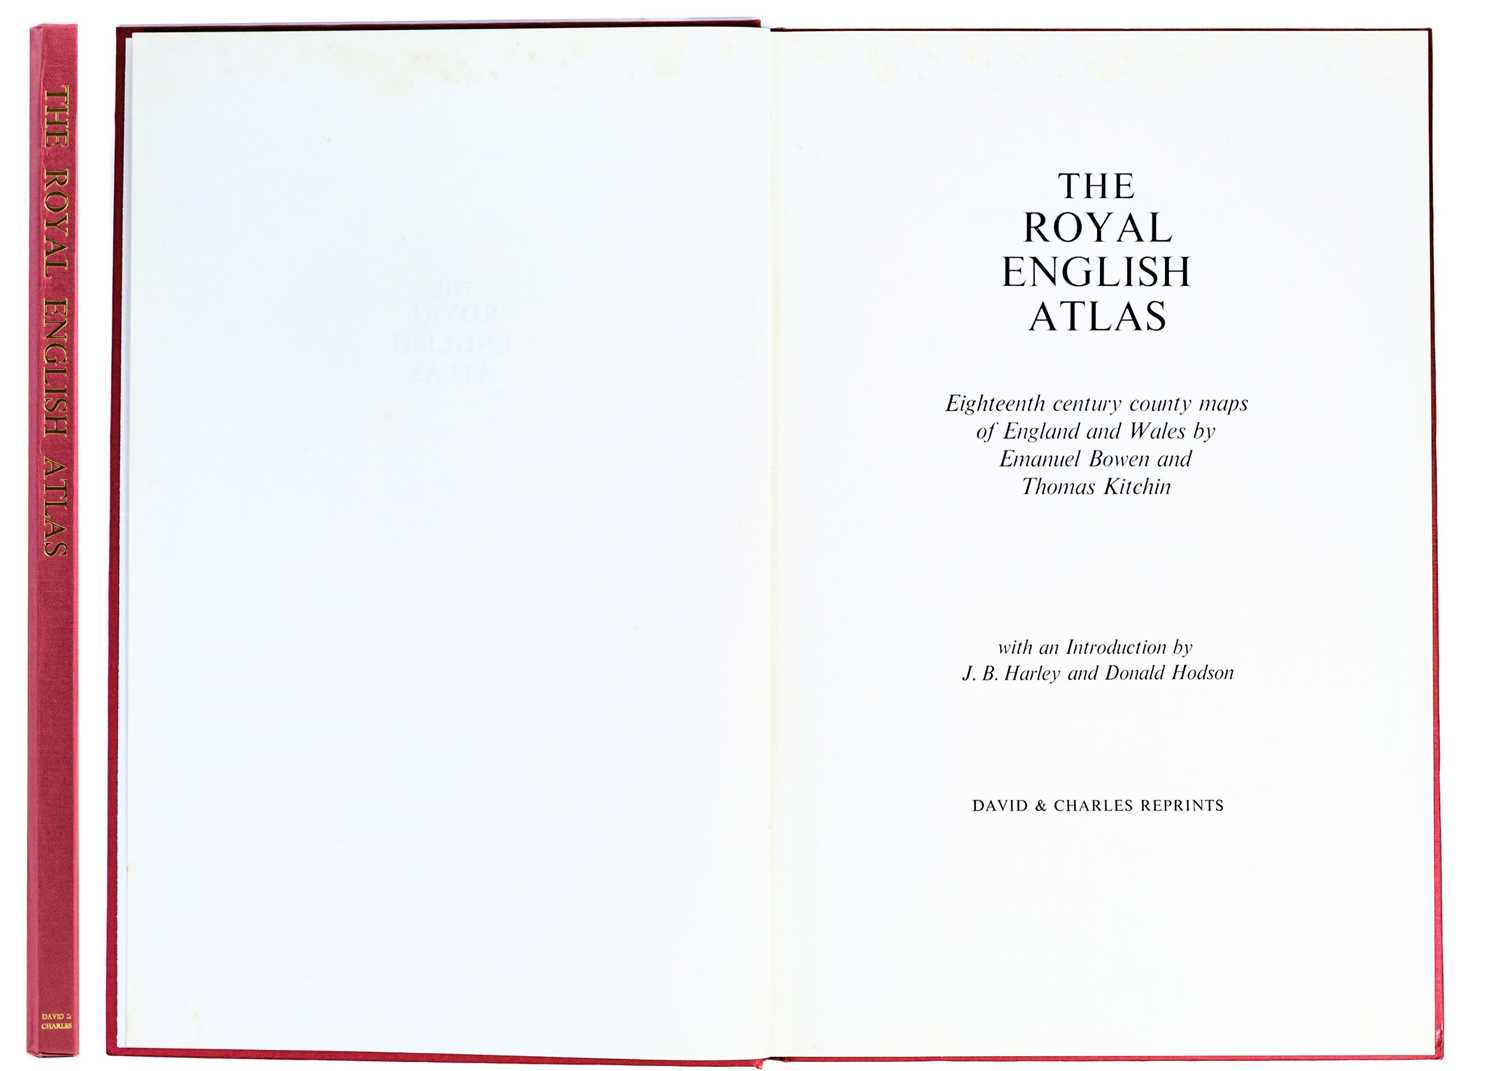 Kitchen, T. and Bowen, E. 'The Royal English Atlas,' - Image 2 of 7